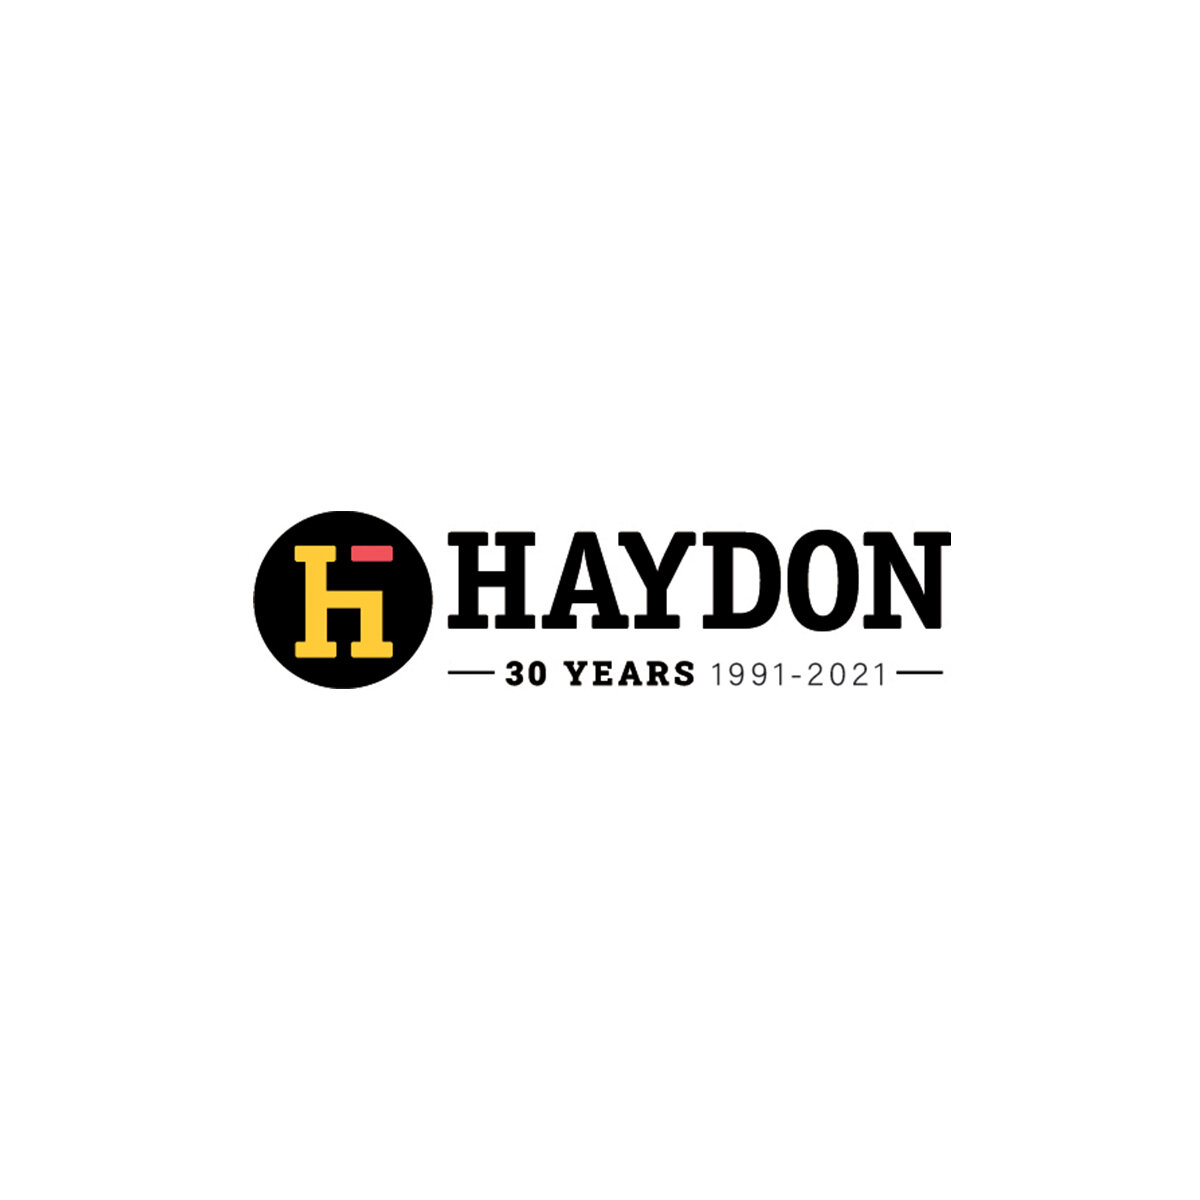 Haydon logo.jpg